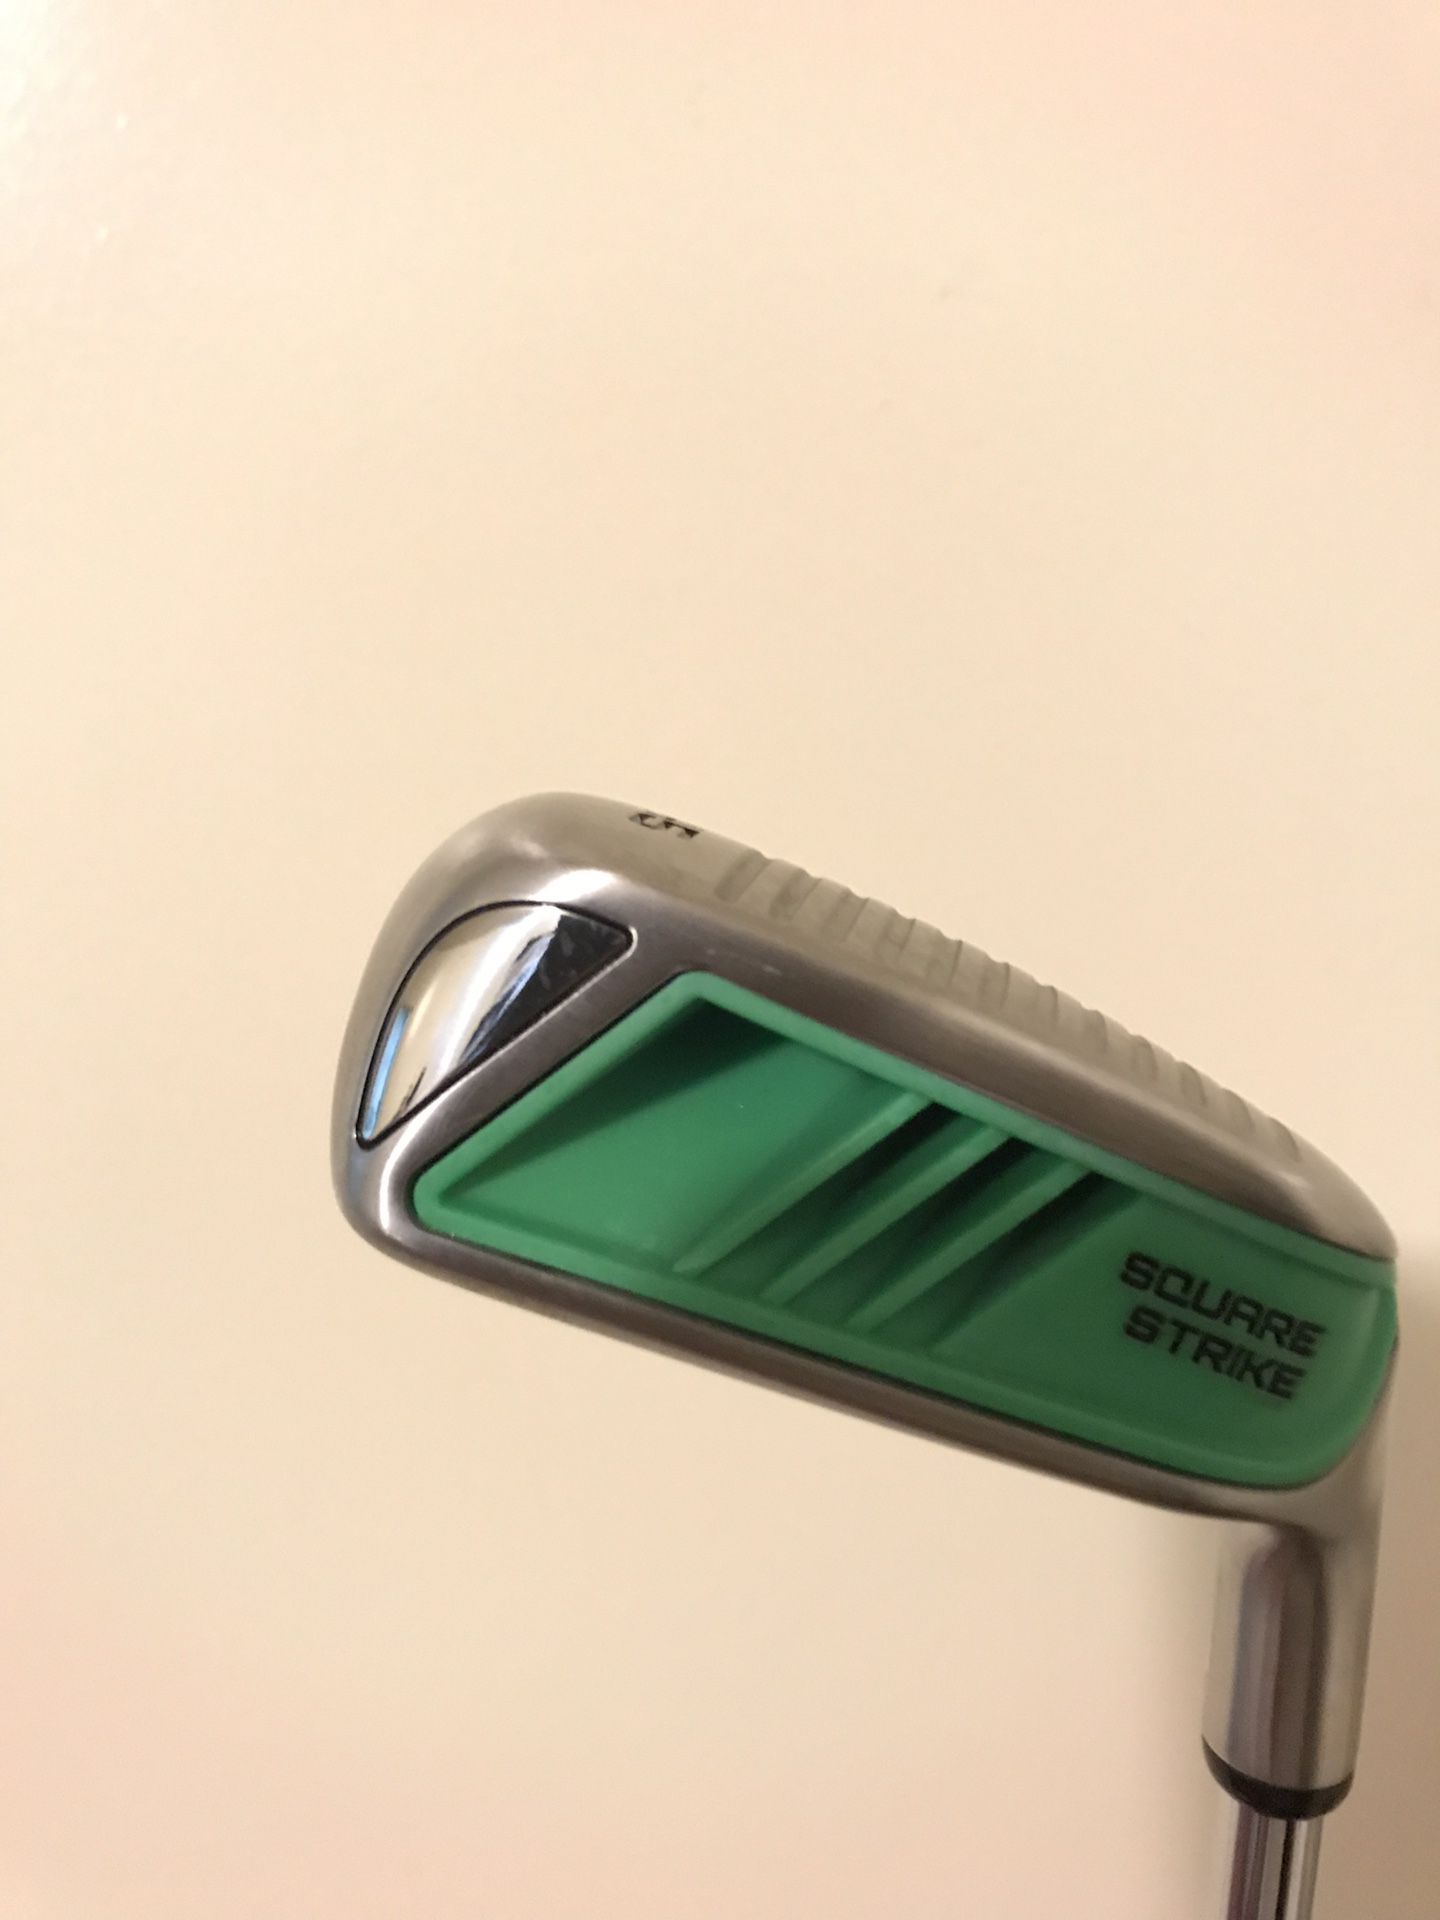 Square strike golf club, brand new